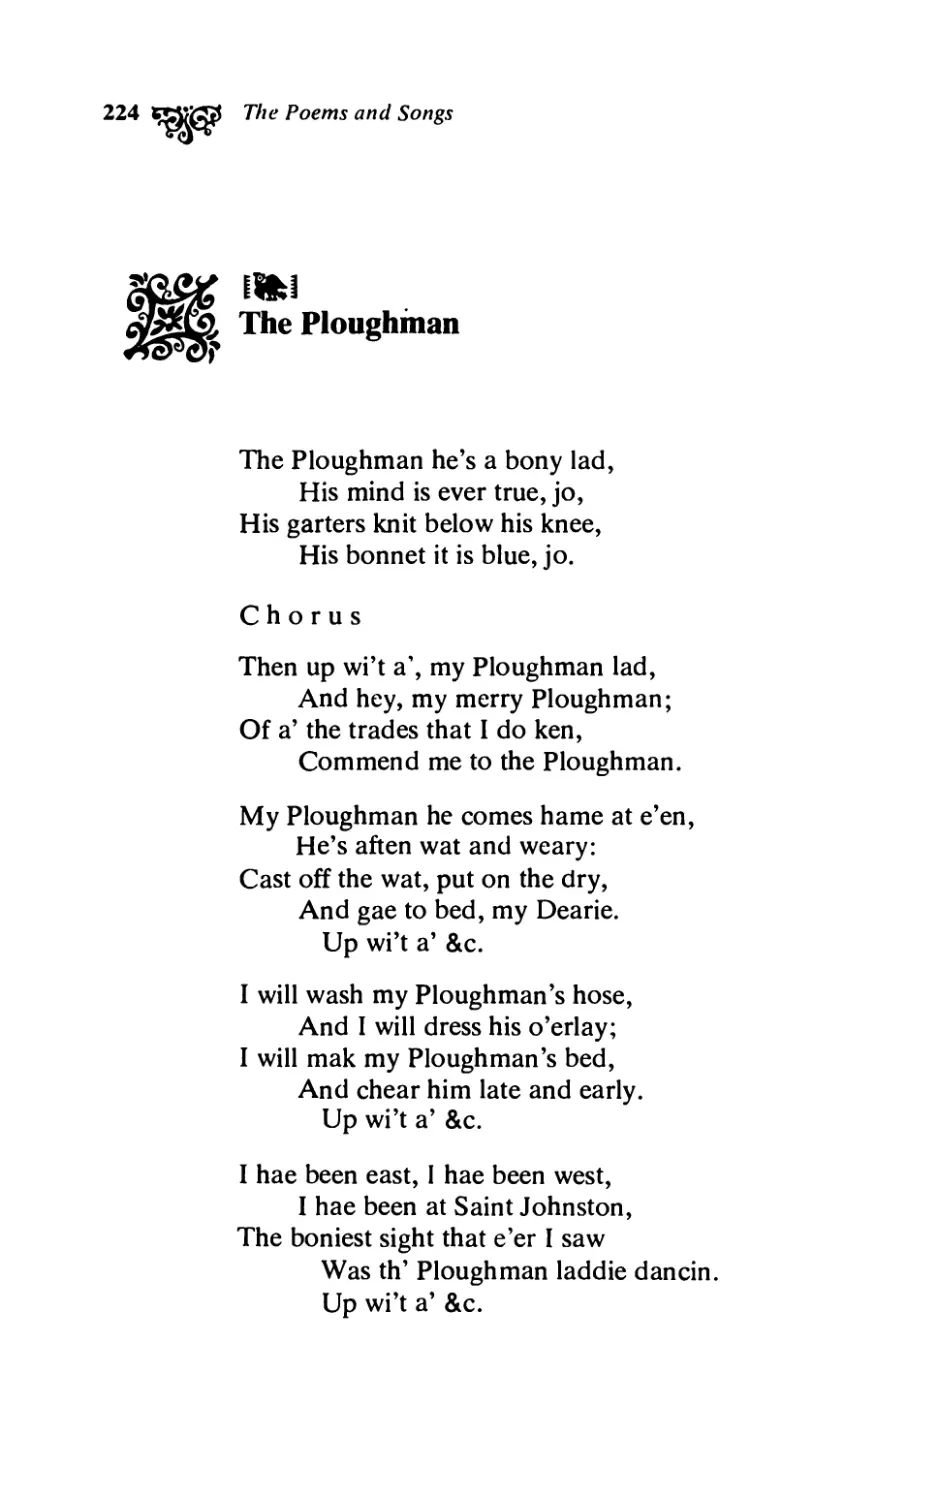 The Ploughman